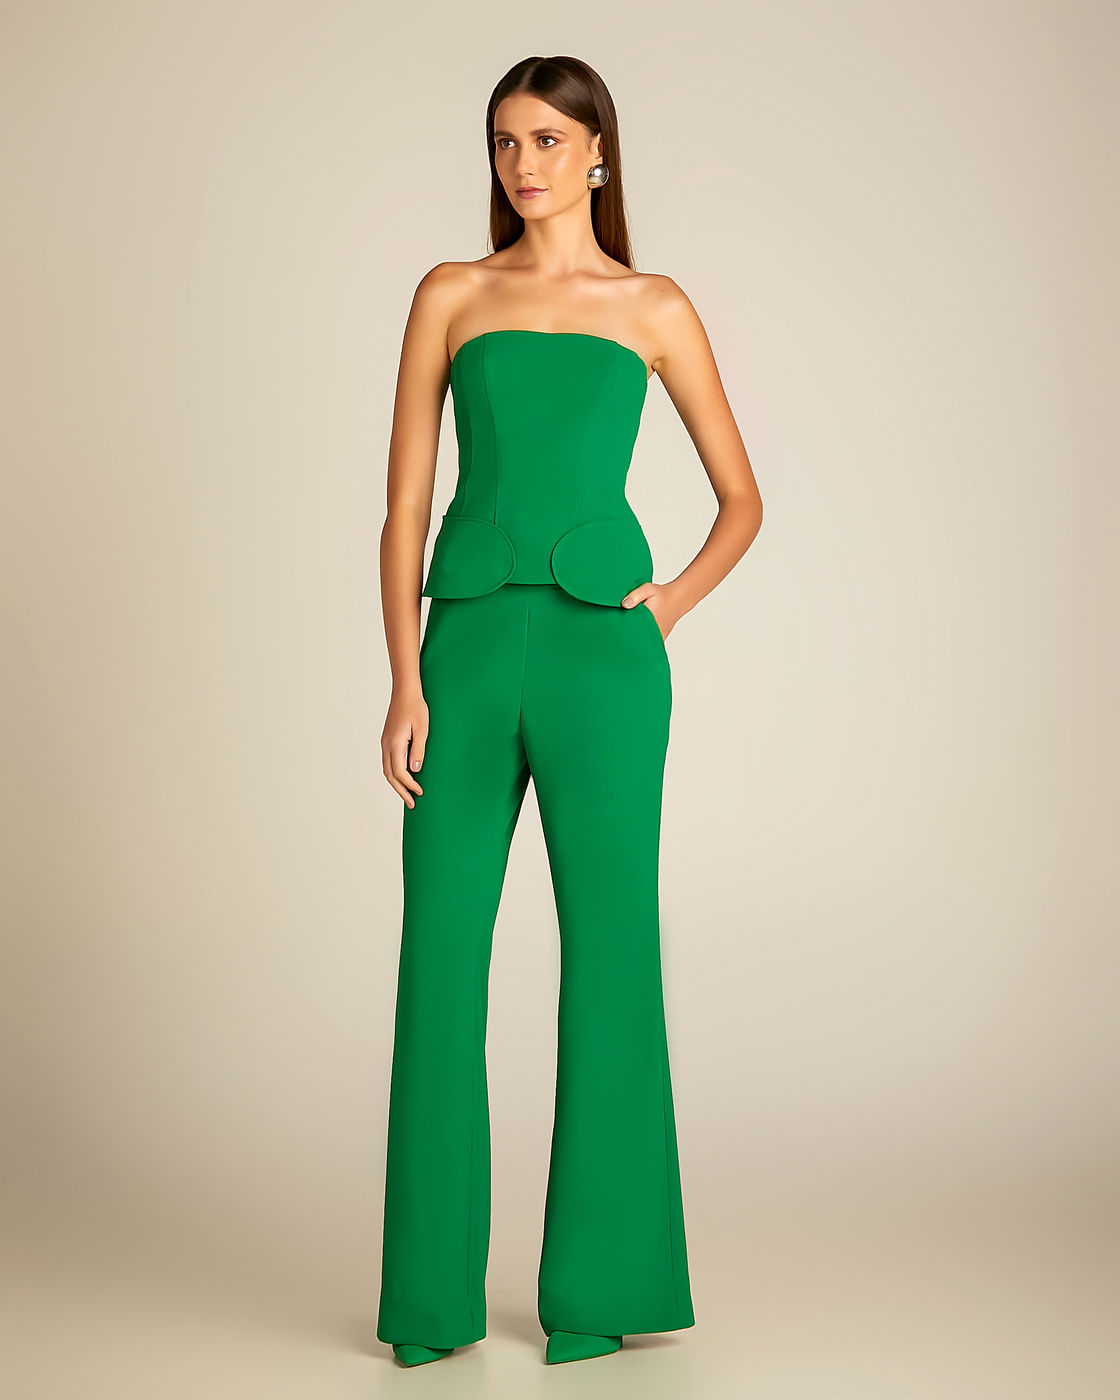 Conjunto verde corset e calça - annefernandes